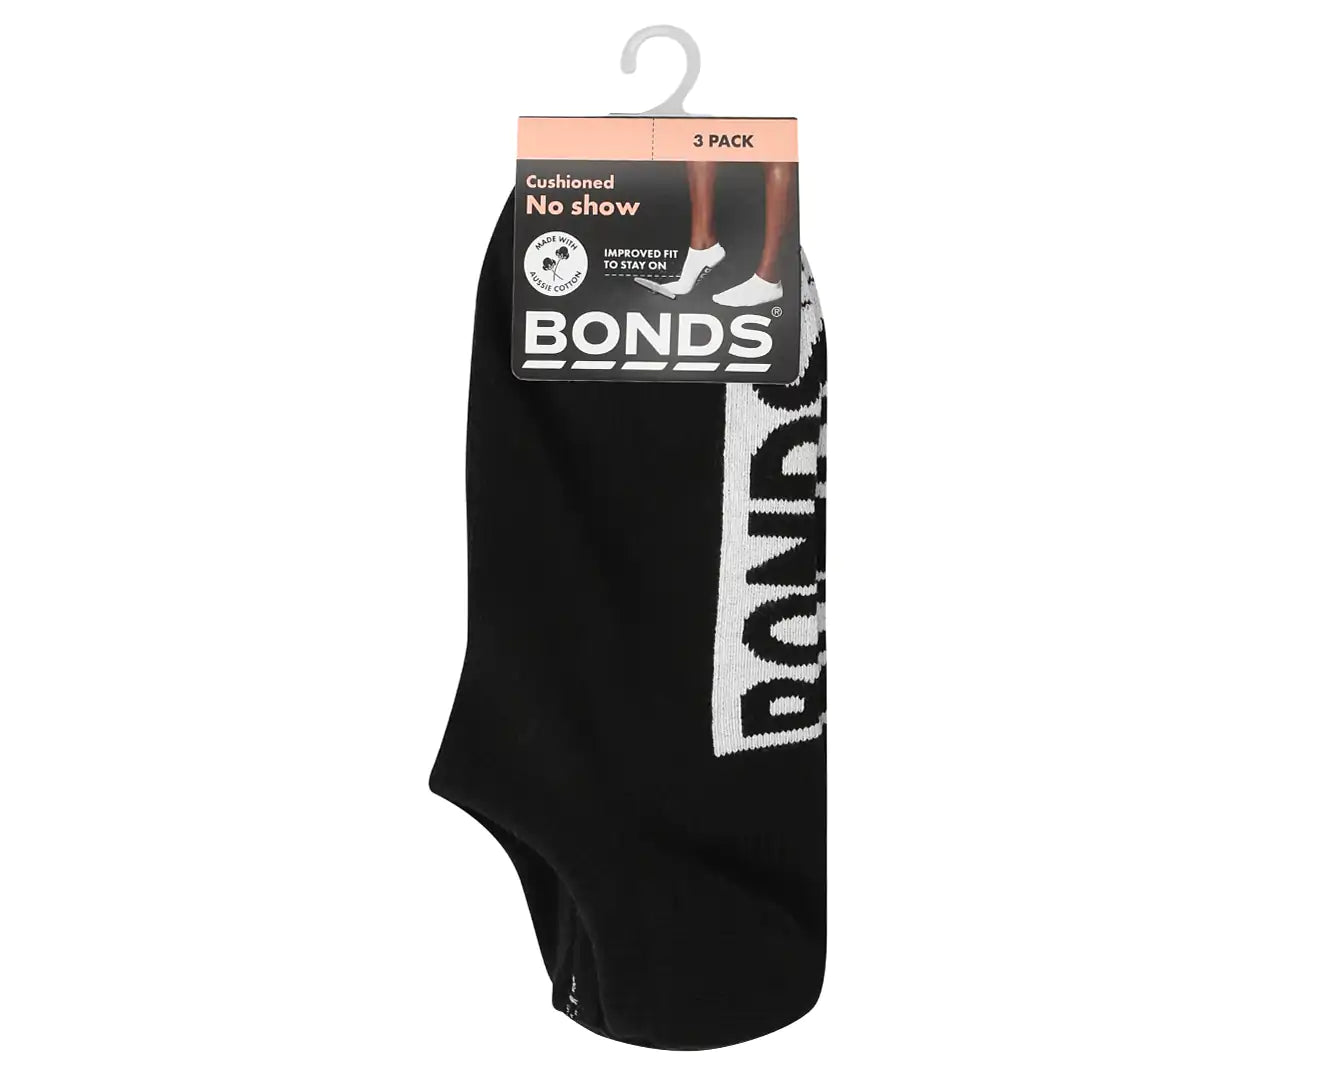 Bonds Womens Cushioned No Show Socks 3 Pack - Charcoal/White/Black